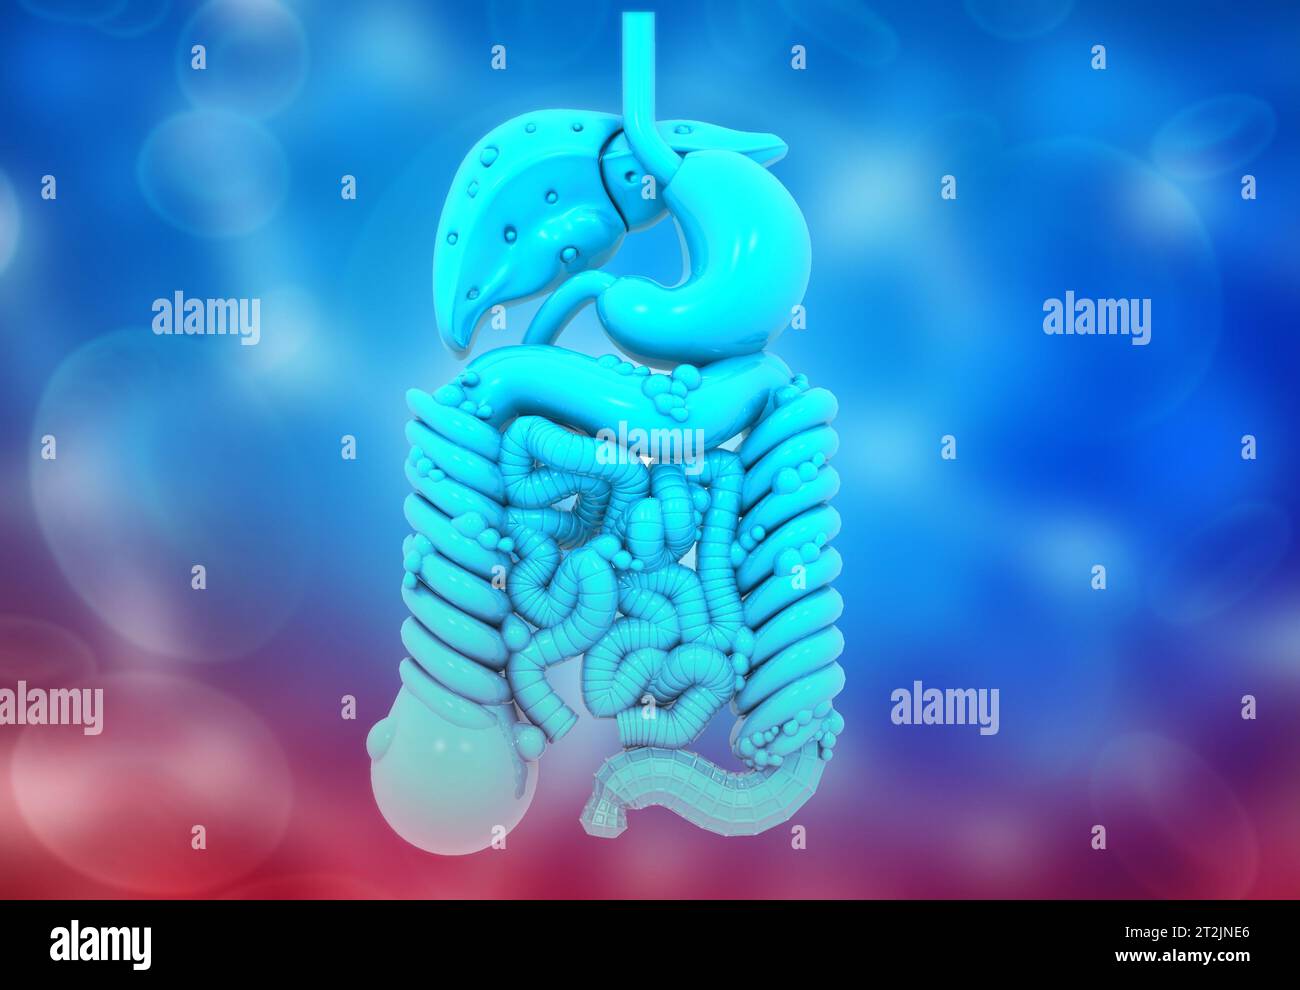 Organes internes humains sur fond bleu. illustration 3d. Banque D'Images